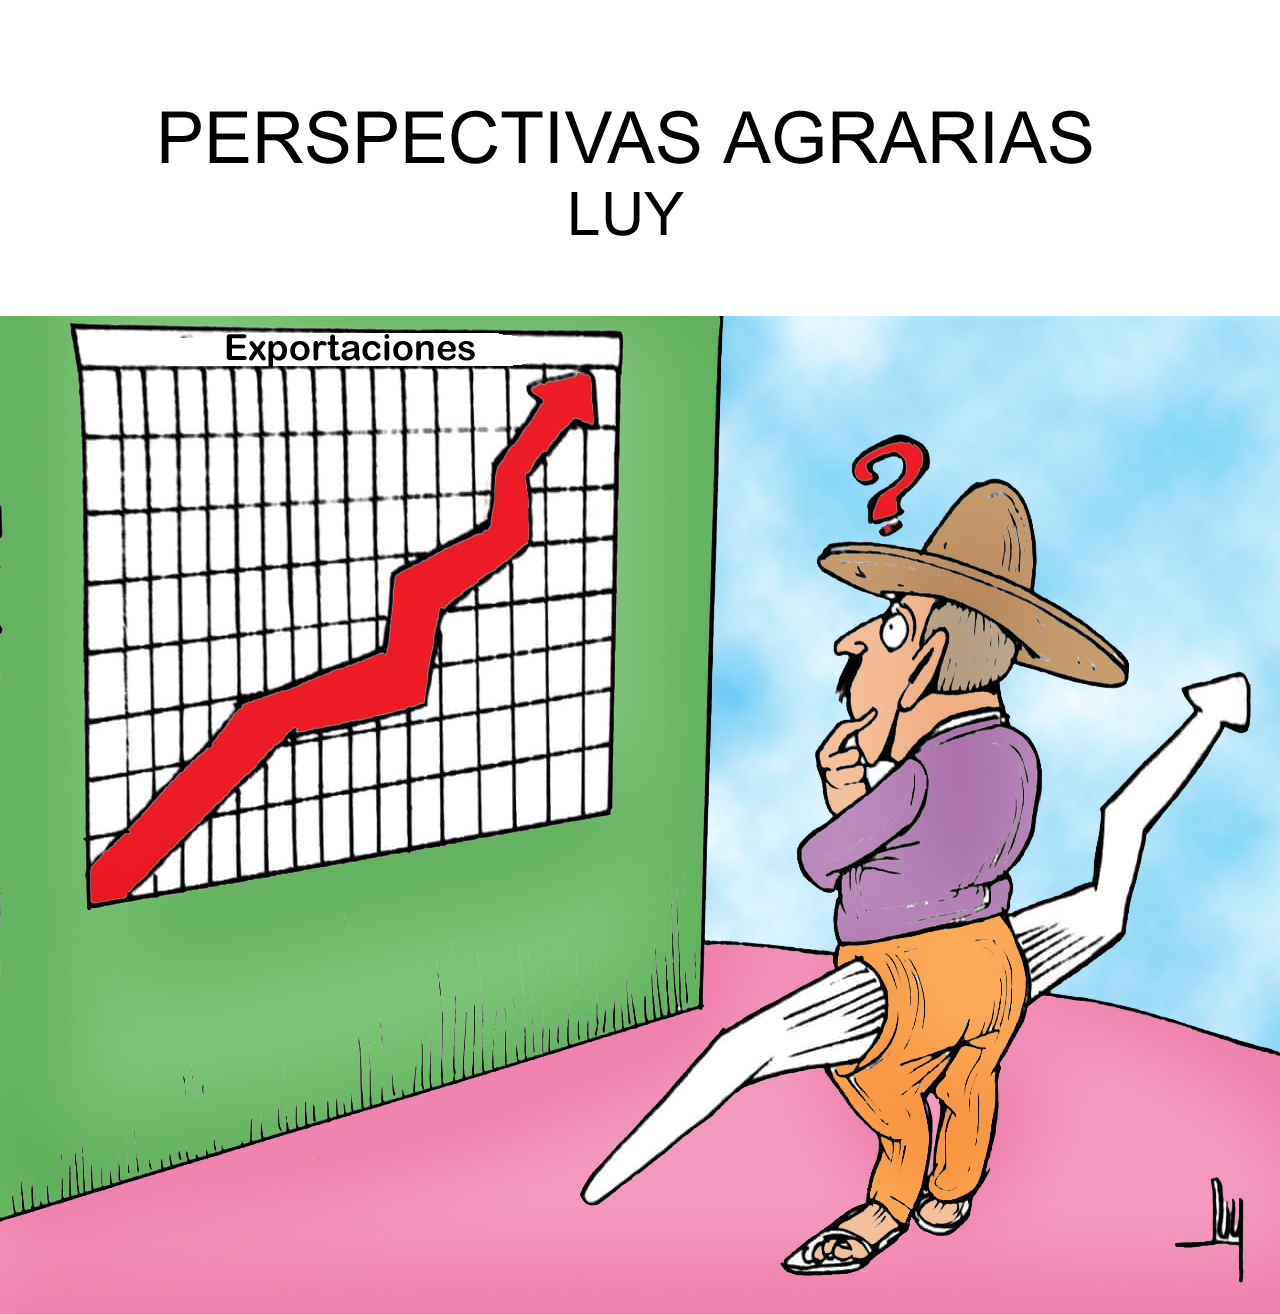 Perspectivas agrarias - Luy